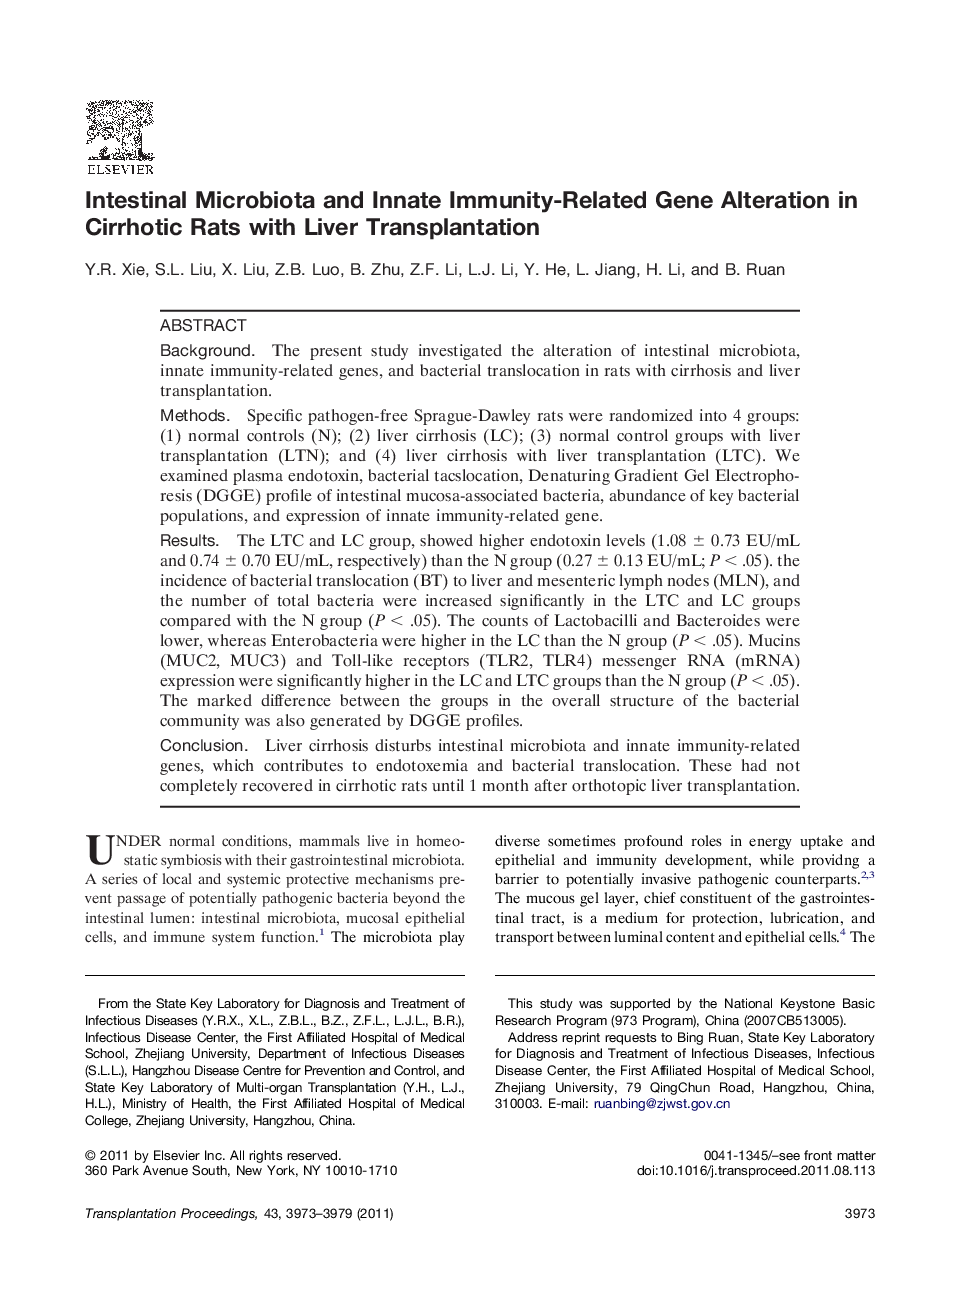 Experimental transplantationTransplantation modelIntestinal Microbiota and Innate Immunity-Related Gene Alteration in Cirrhotic Rats with Liver Transplantation